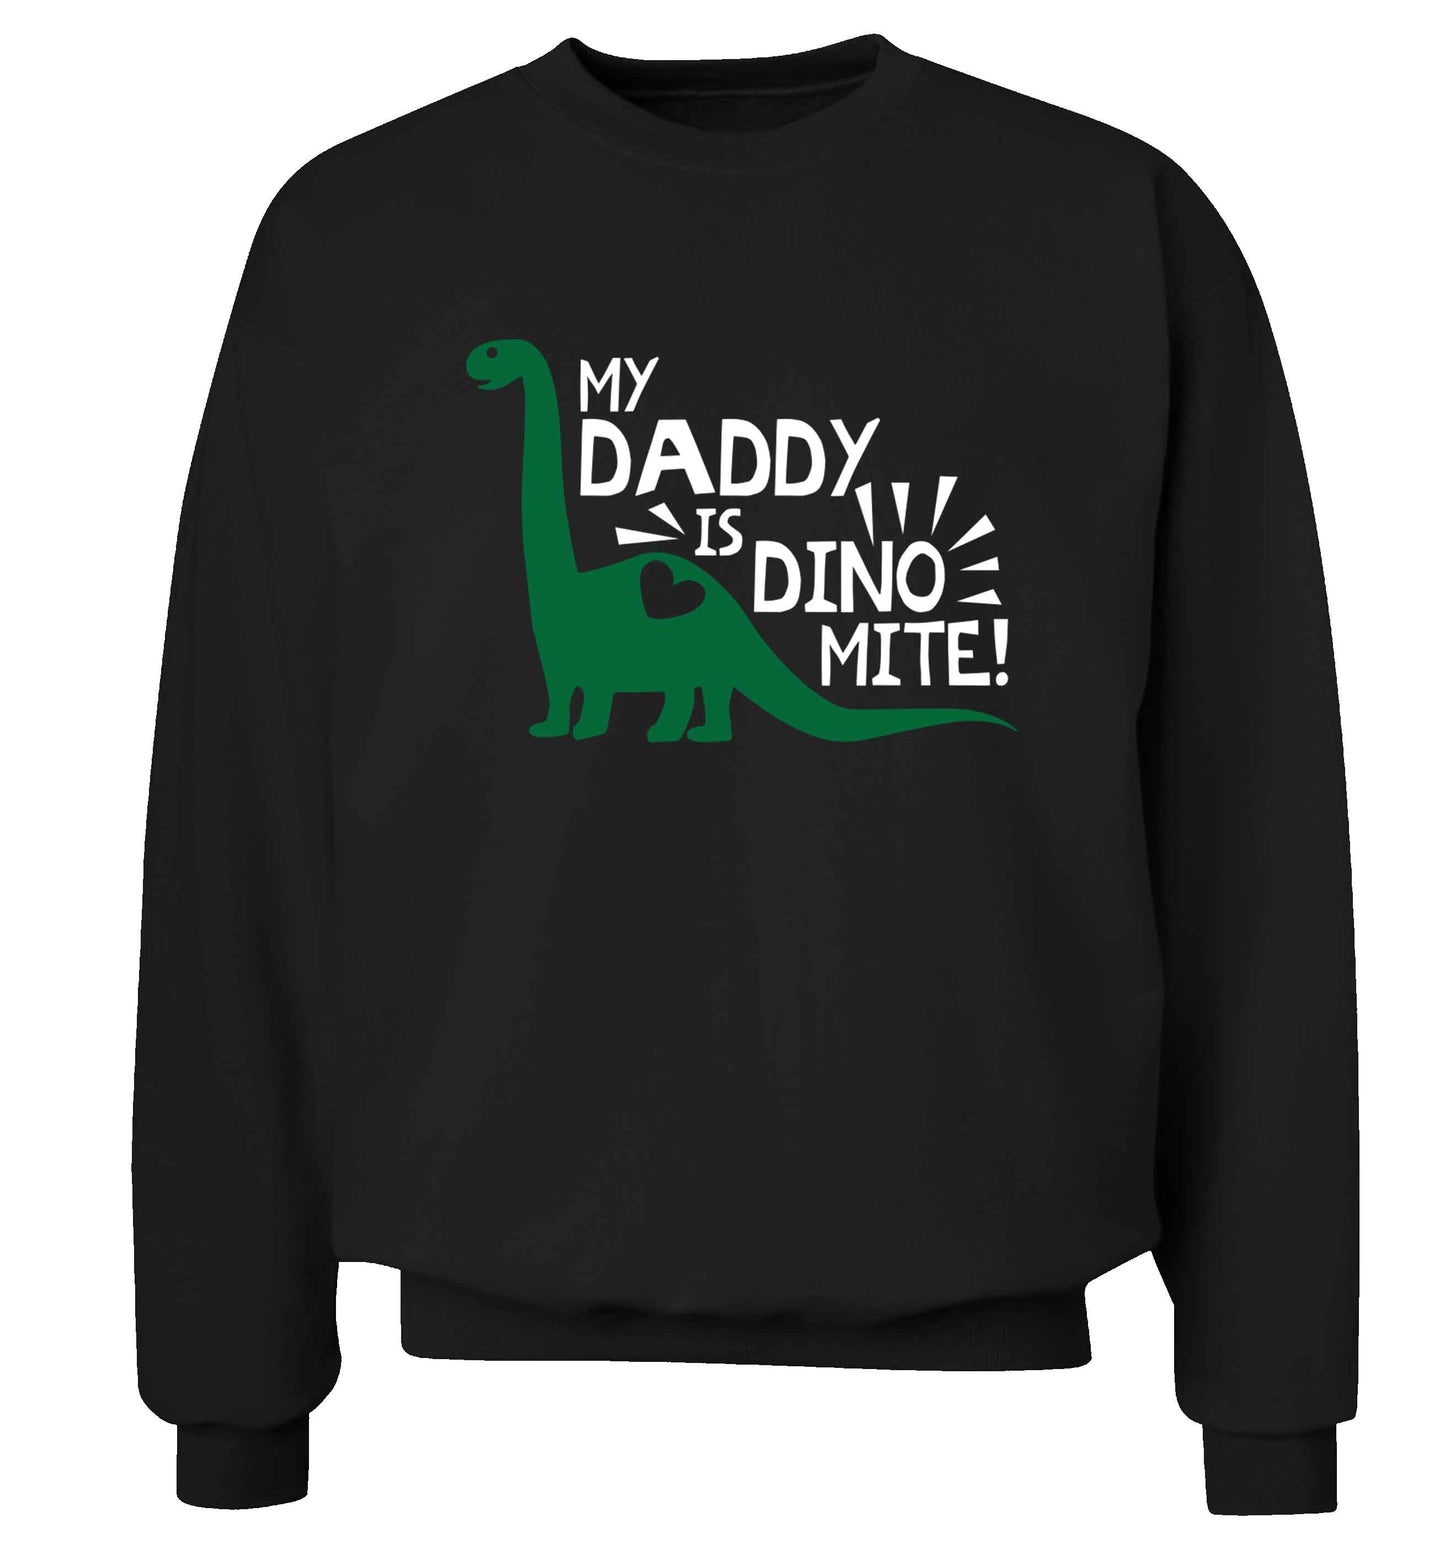 My daddy is dinomite! Adult's unisex black Sweater 2XL